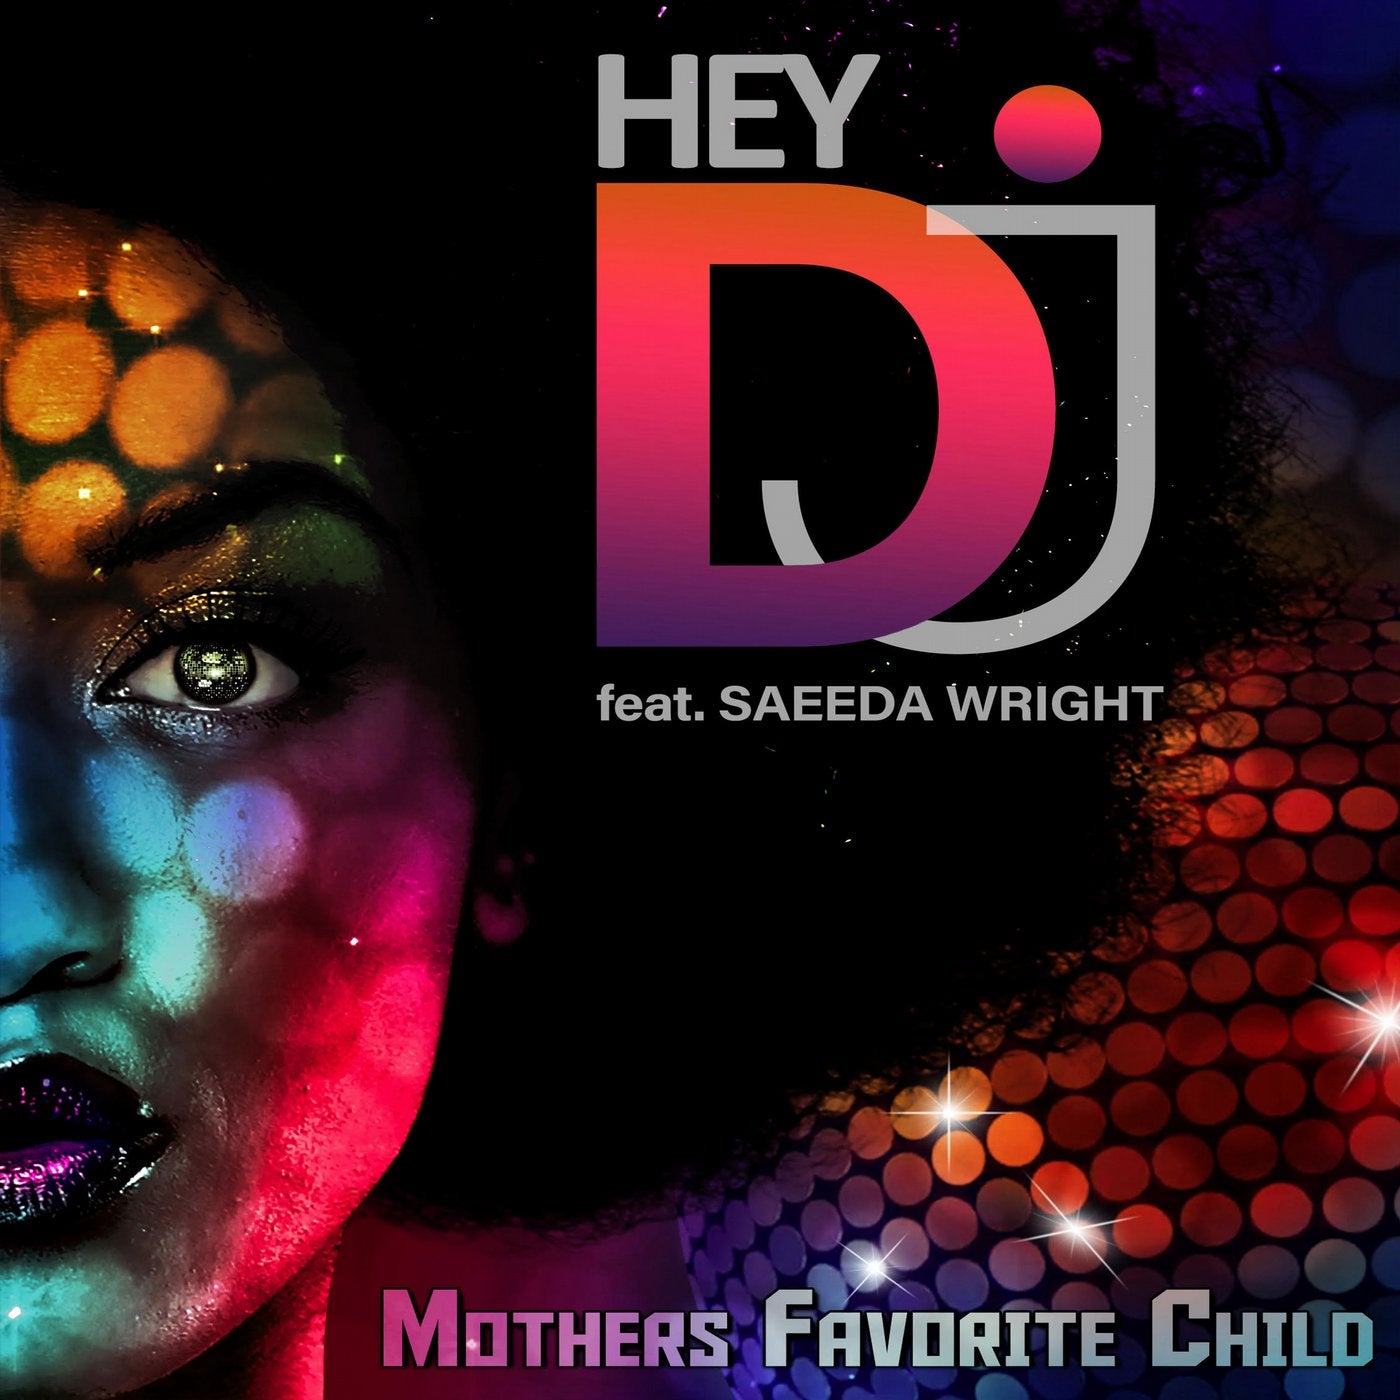 Hey DJ (feat. Saeeda Wright)